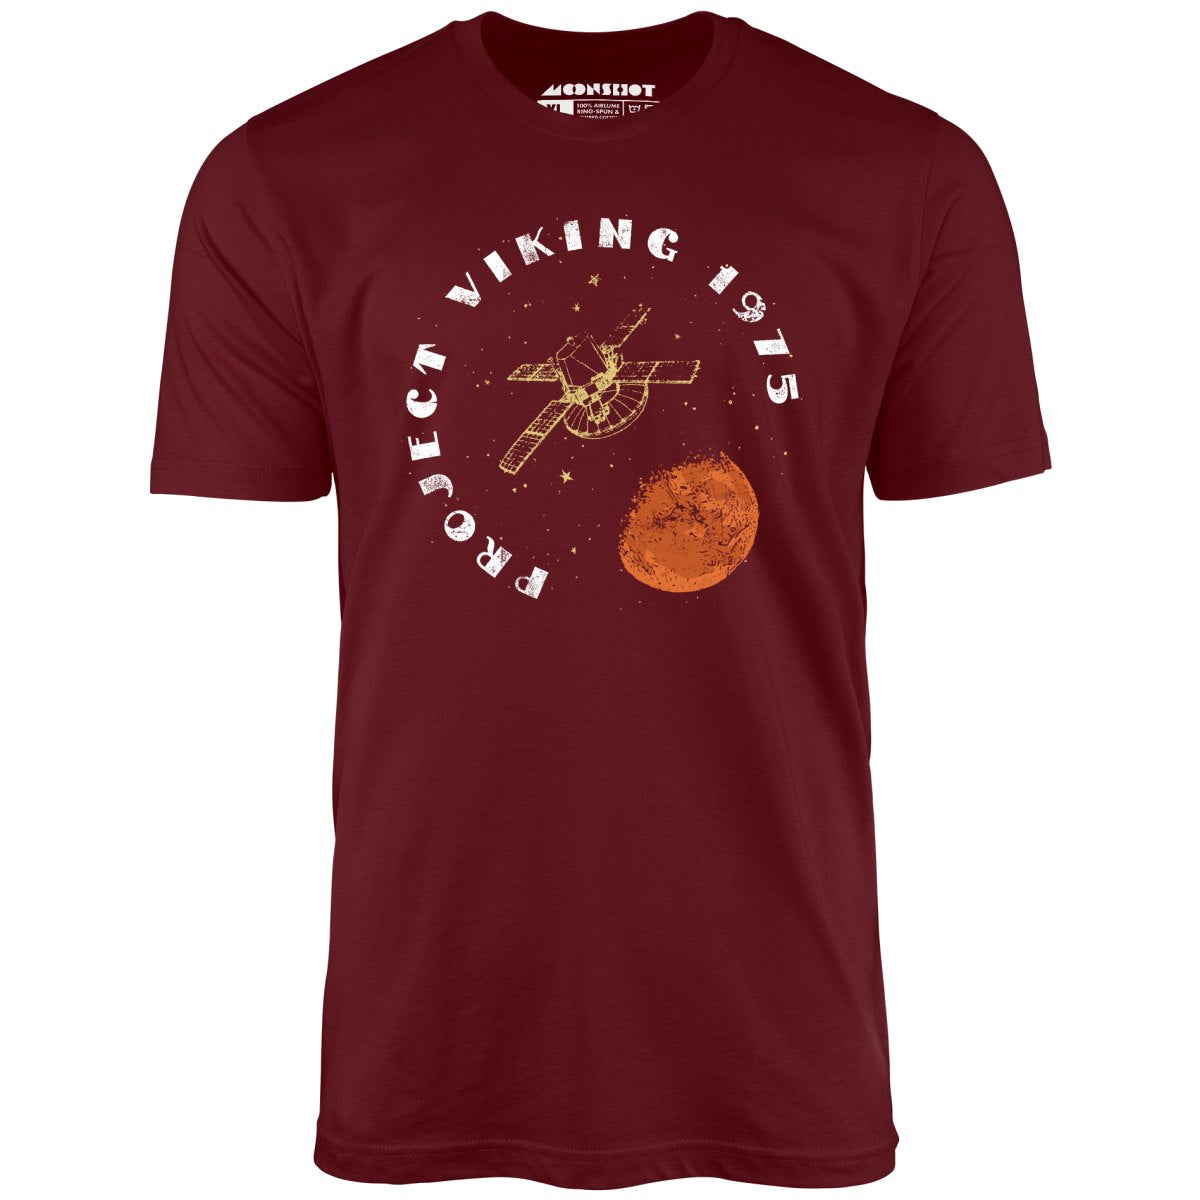 Project Viking 1975 - Unisex T-Shirt